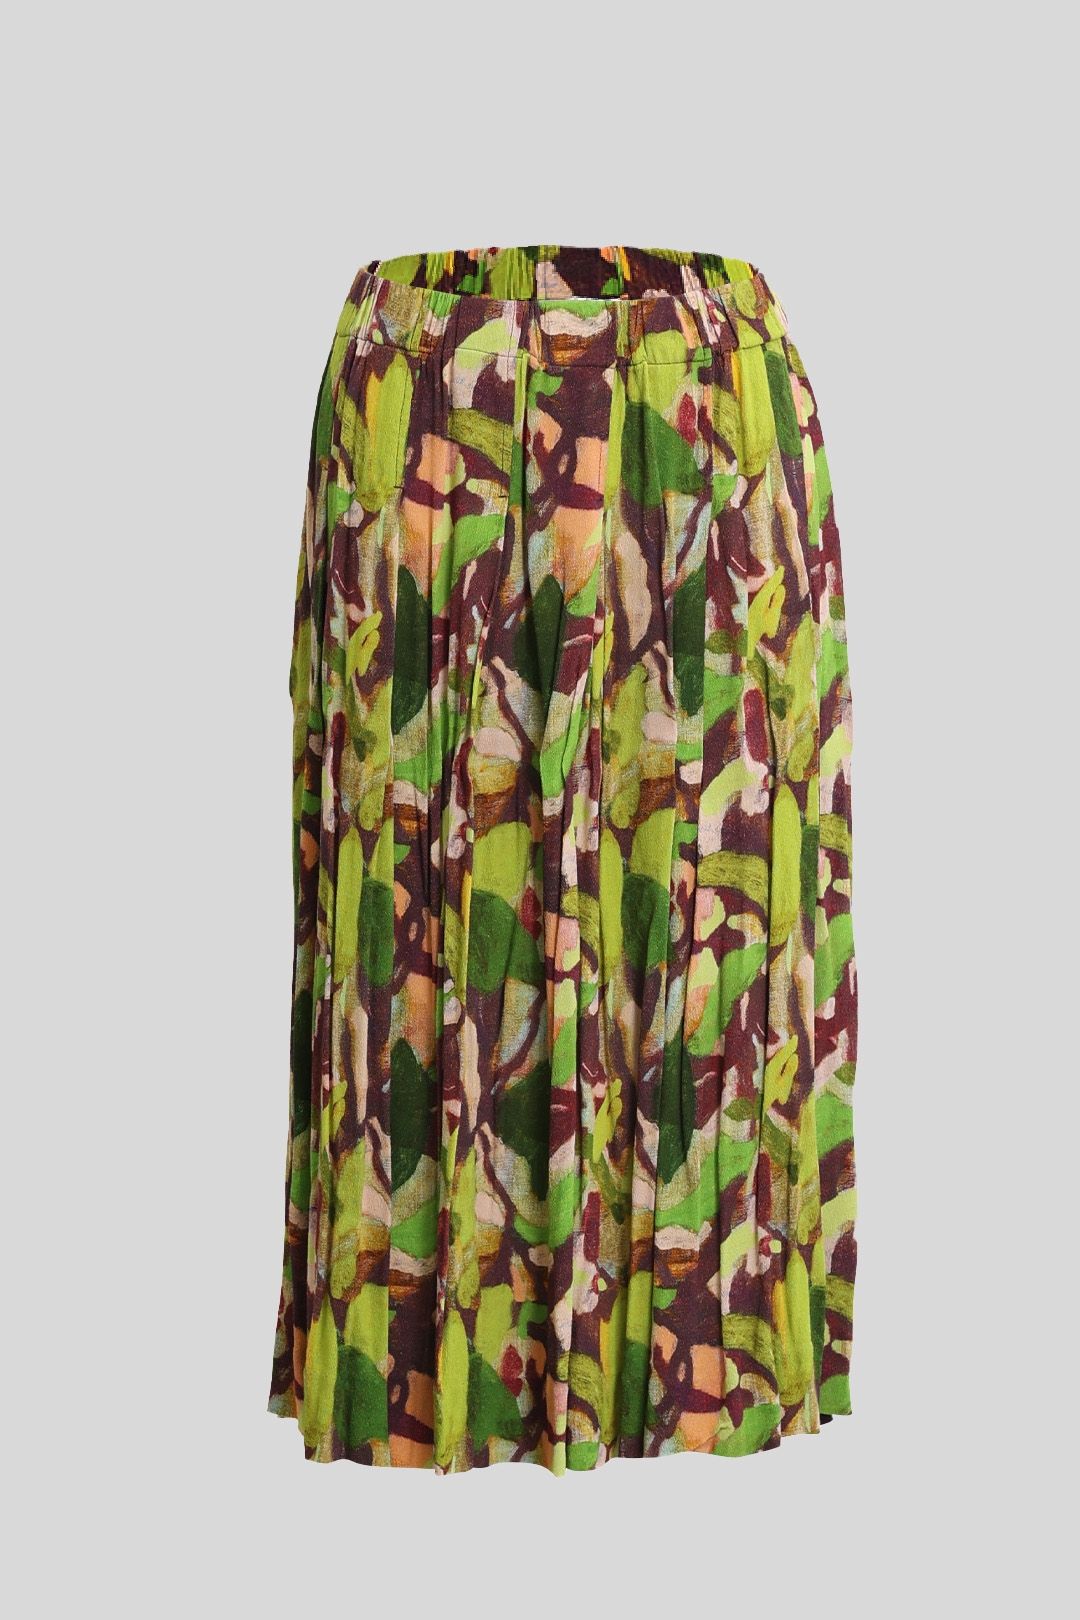 Rebekah Callaghan x Gorman  - Maple Leaf Pleated Full Skirt